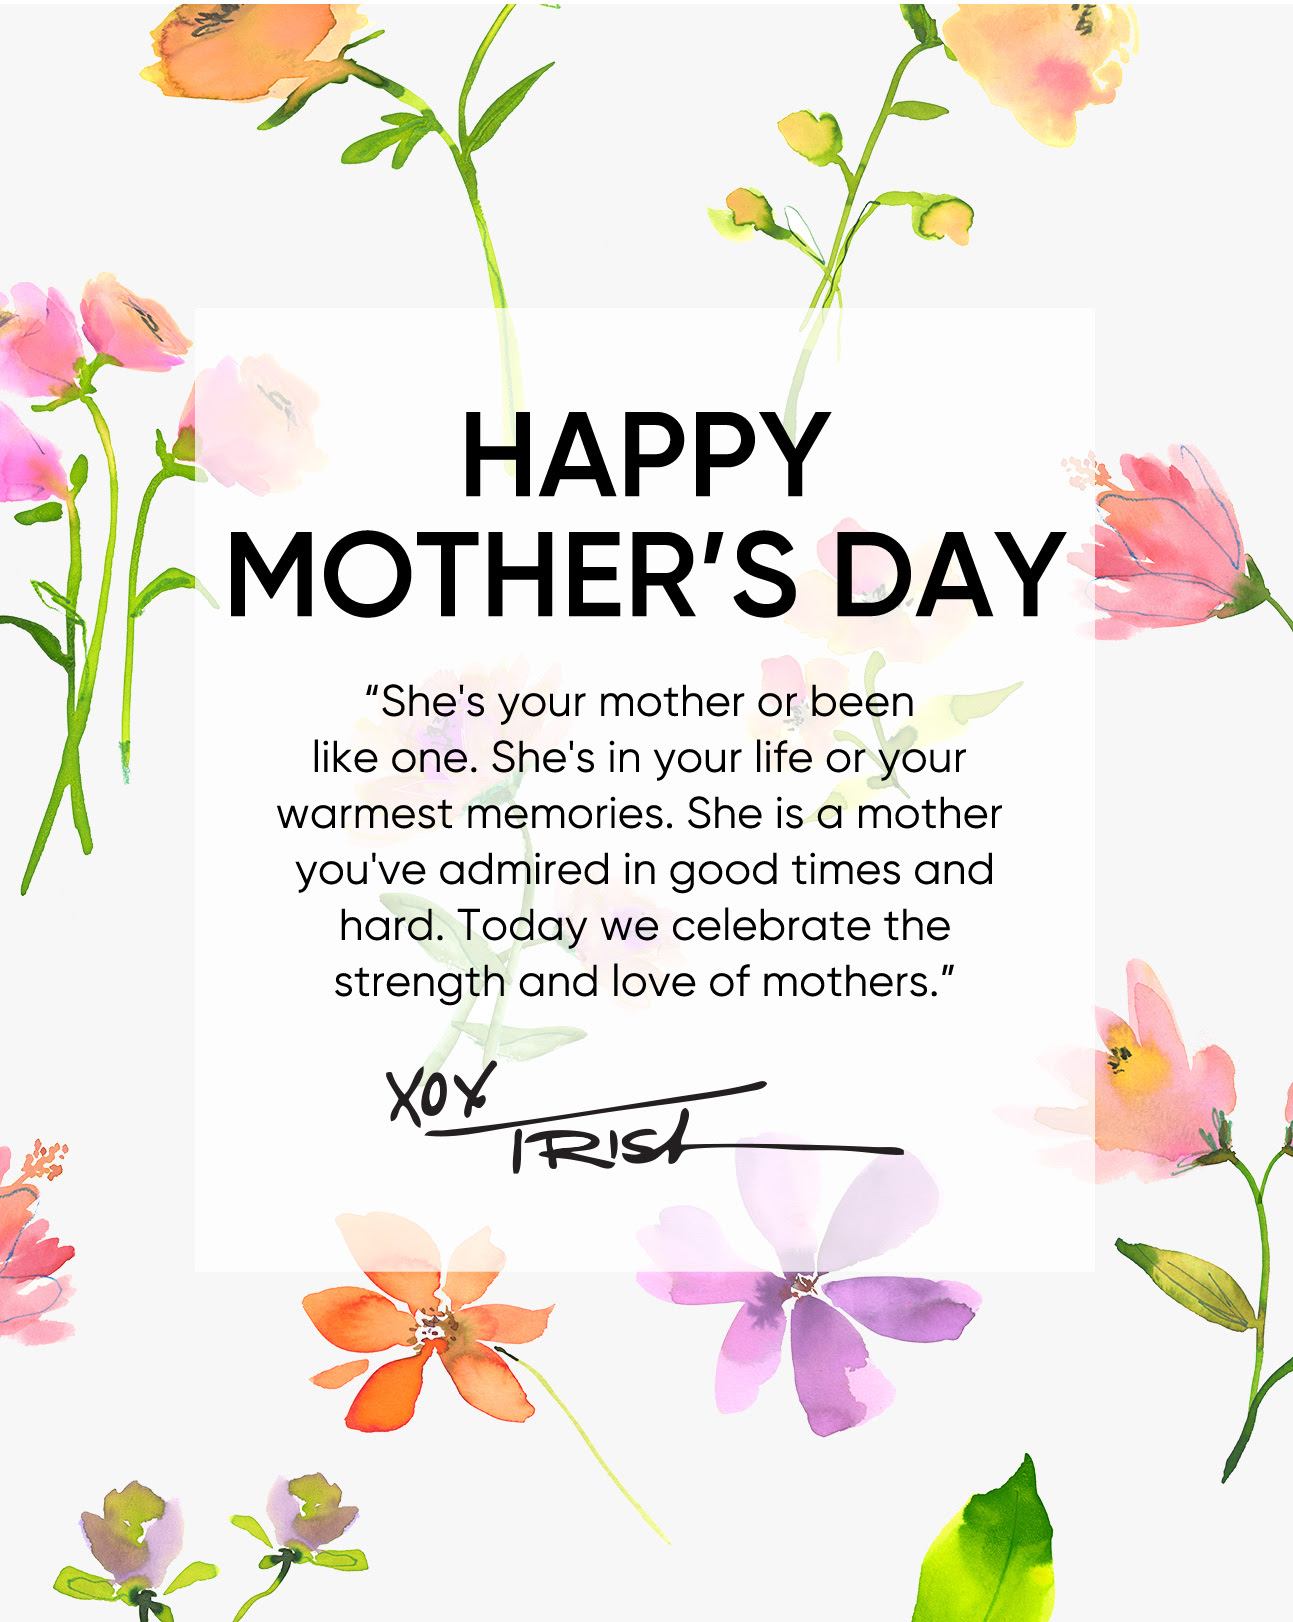 trish envoy - Happy Mothers Day